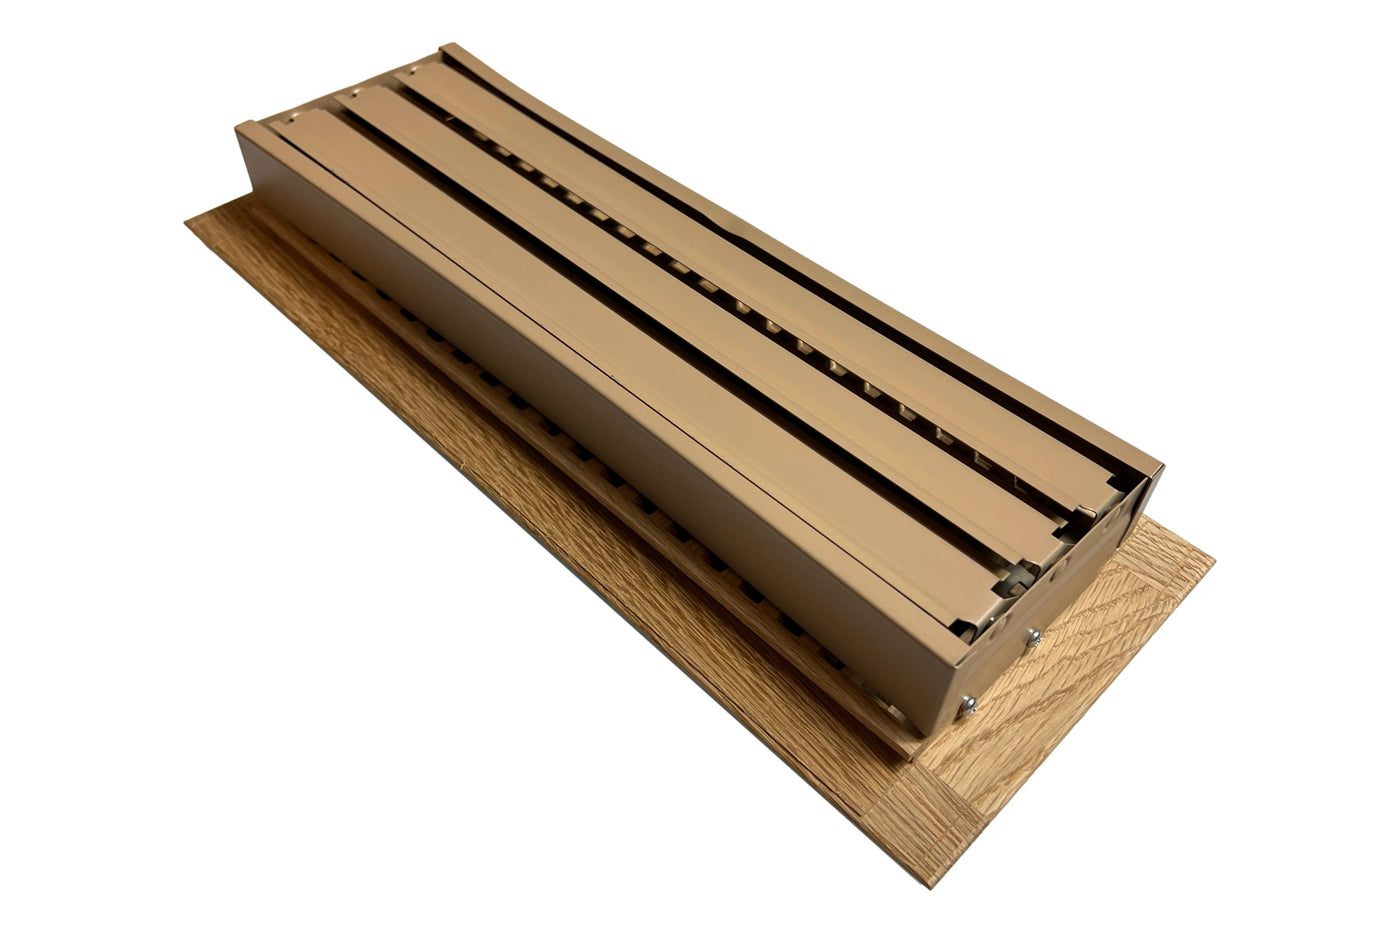 4" x 12" Red Oak Wood Register - Drop In Style (Unfinished)